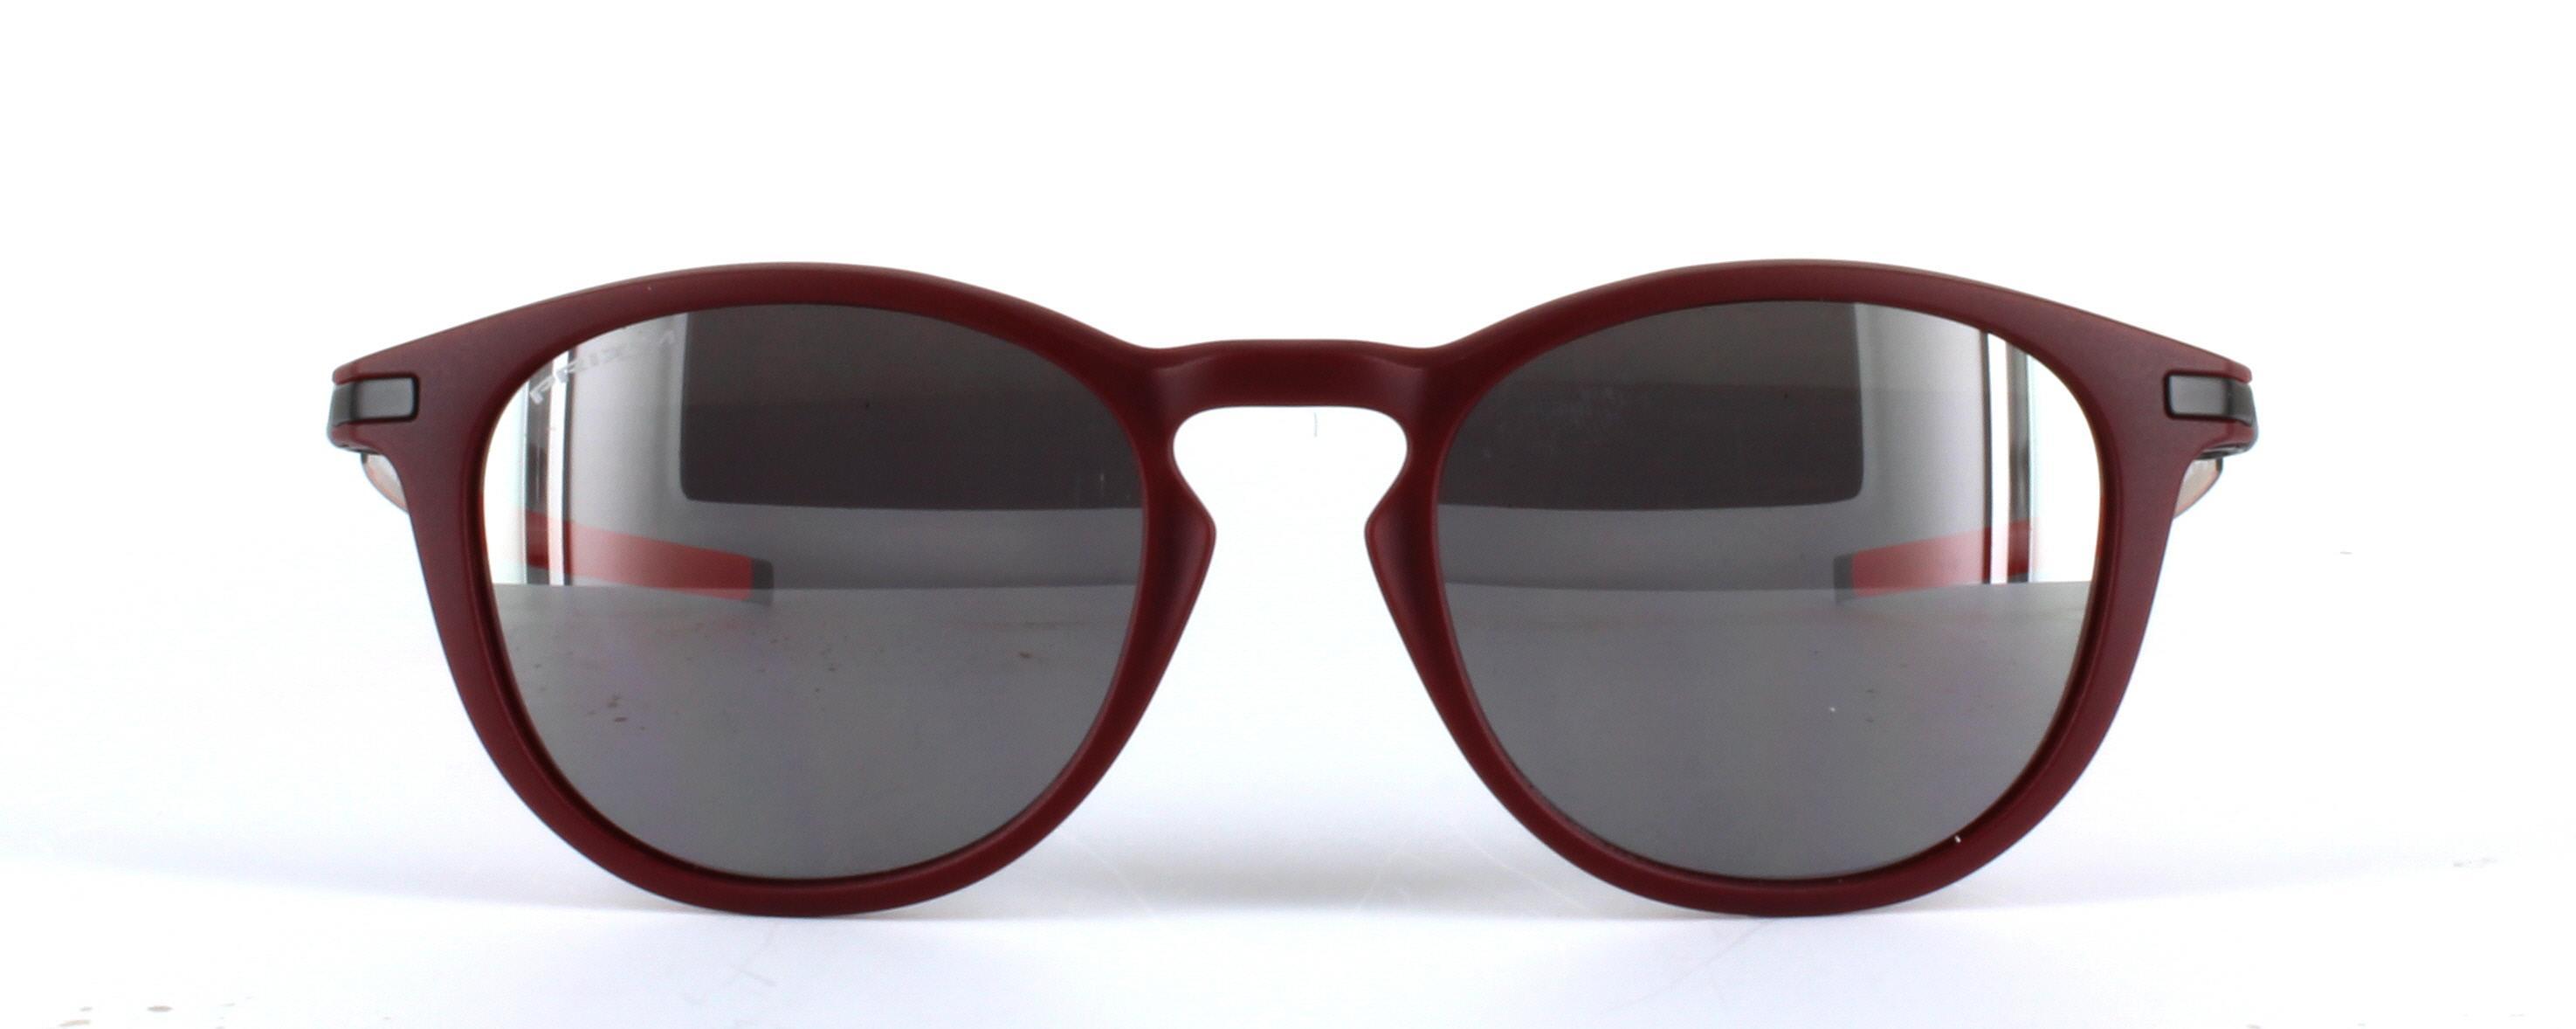 Oakley (O9439) Burgundy Full Rim Plastic Prescription Sunglasses - Image View 5